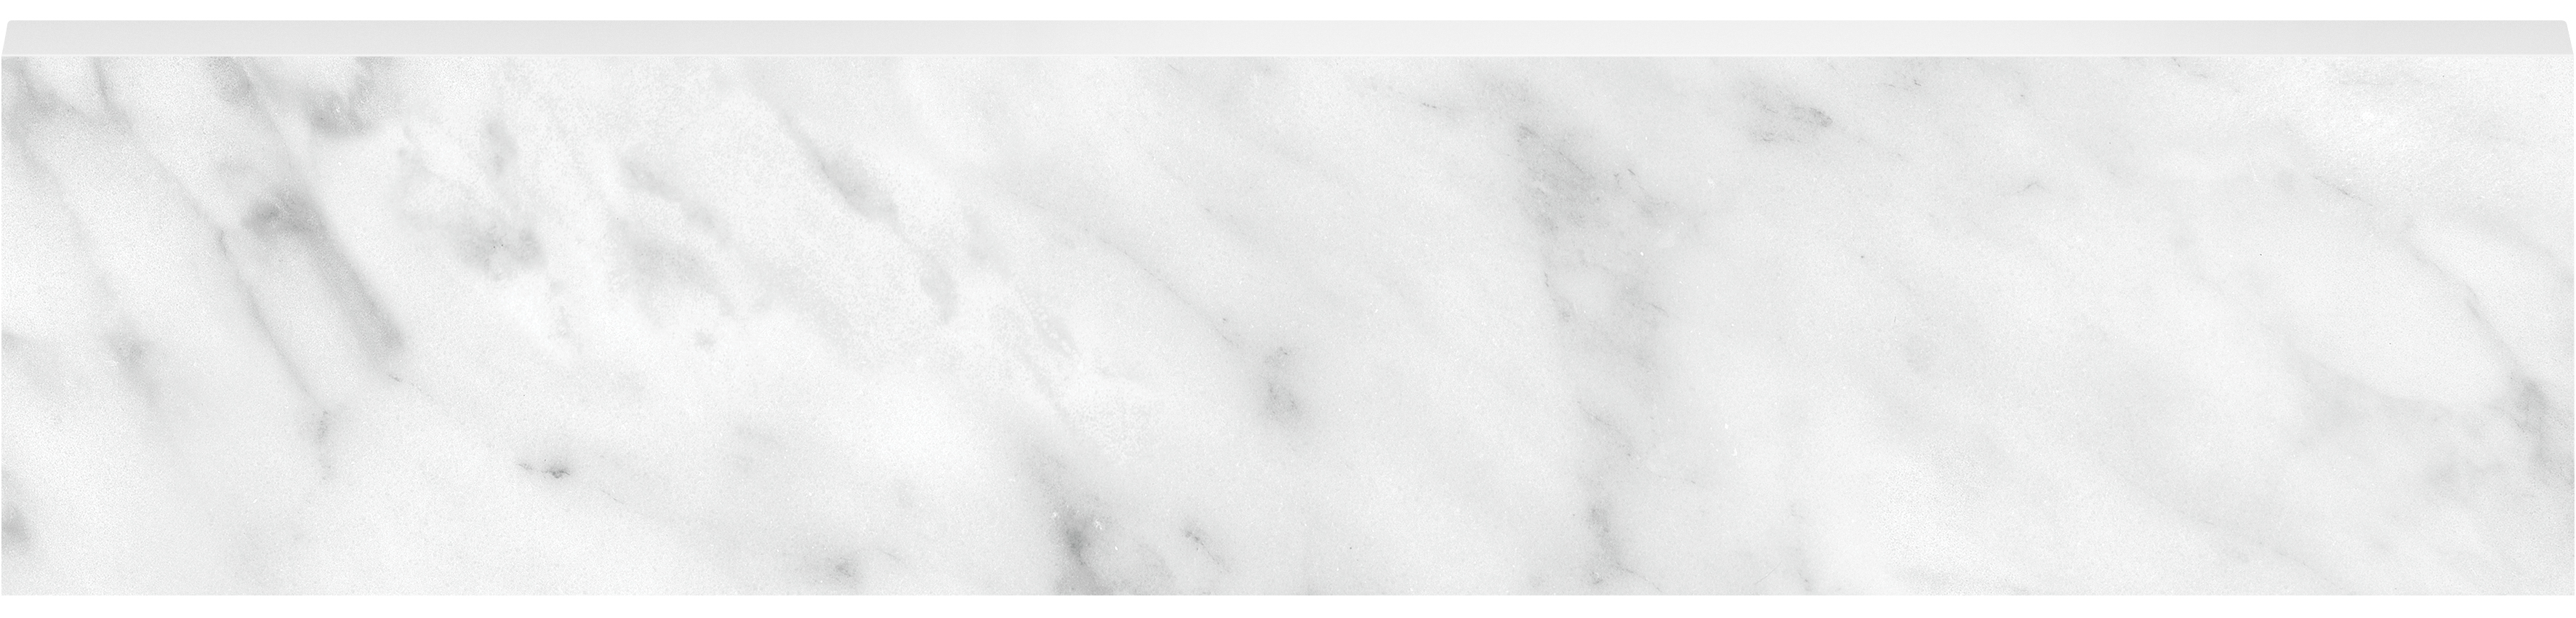 carrara gioia pattern glazed porcelain bullnose molding from la marca anatolia collection distributed by surface group international polished finish straight edge edge 3x12 bar shape